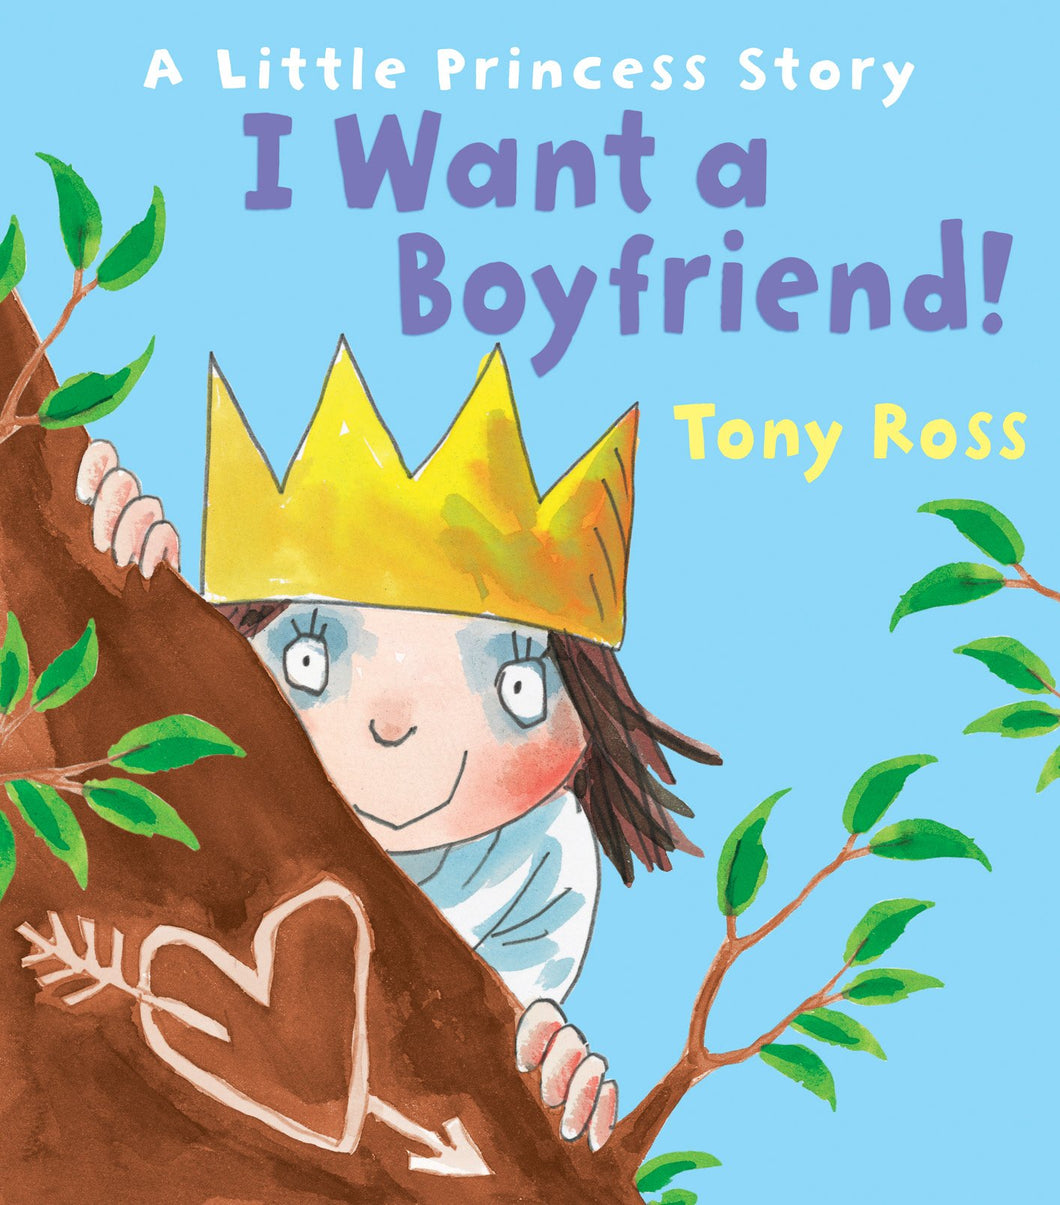 Little Princess: I Want a Boyfriend!